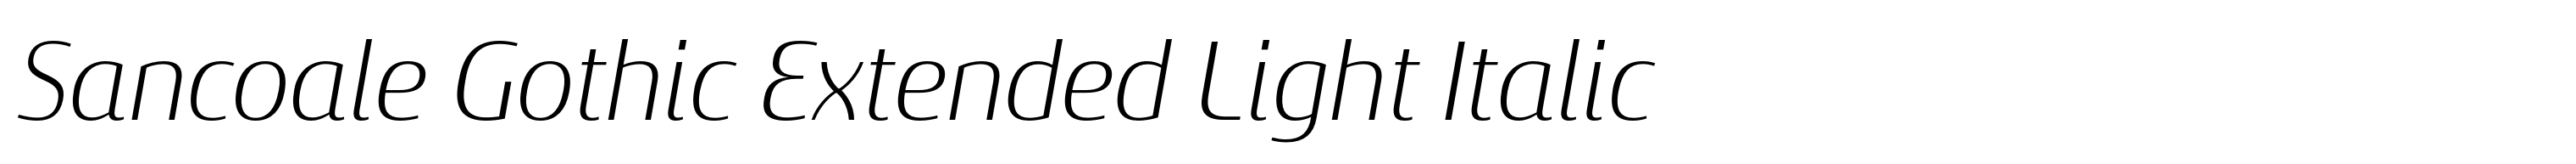 Sancoale Gothic Extended Light Italic